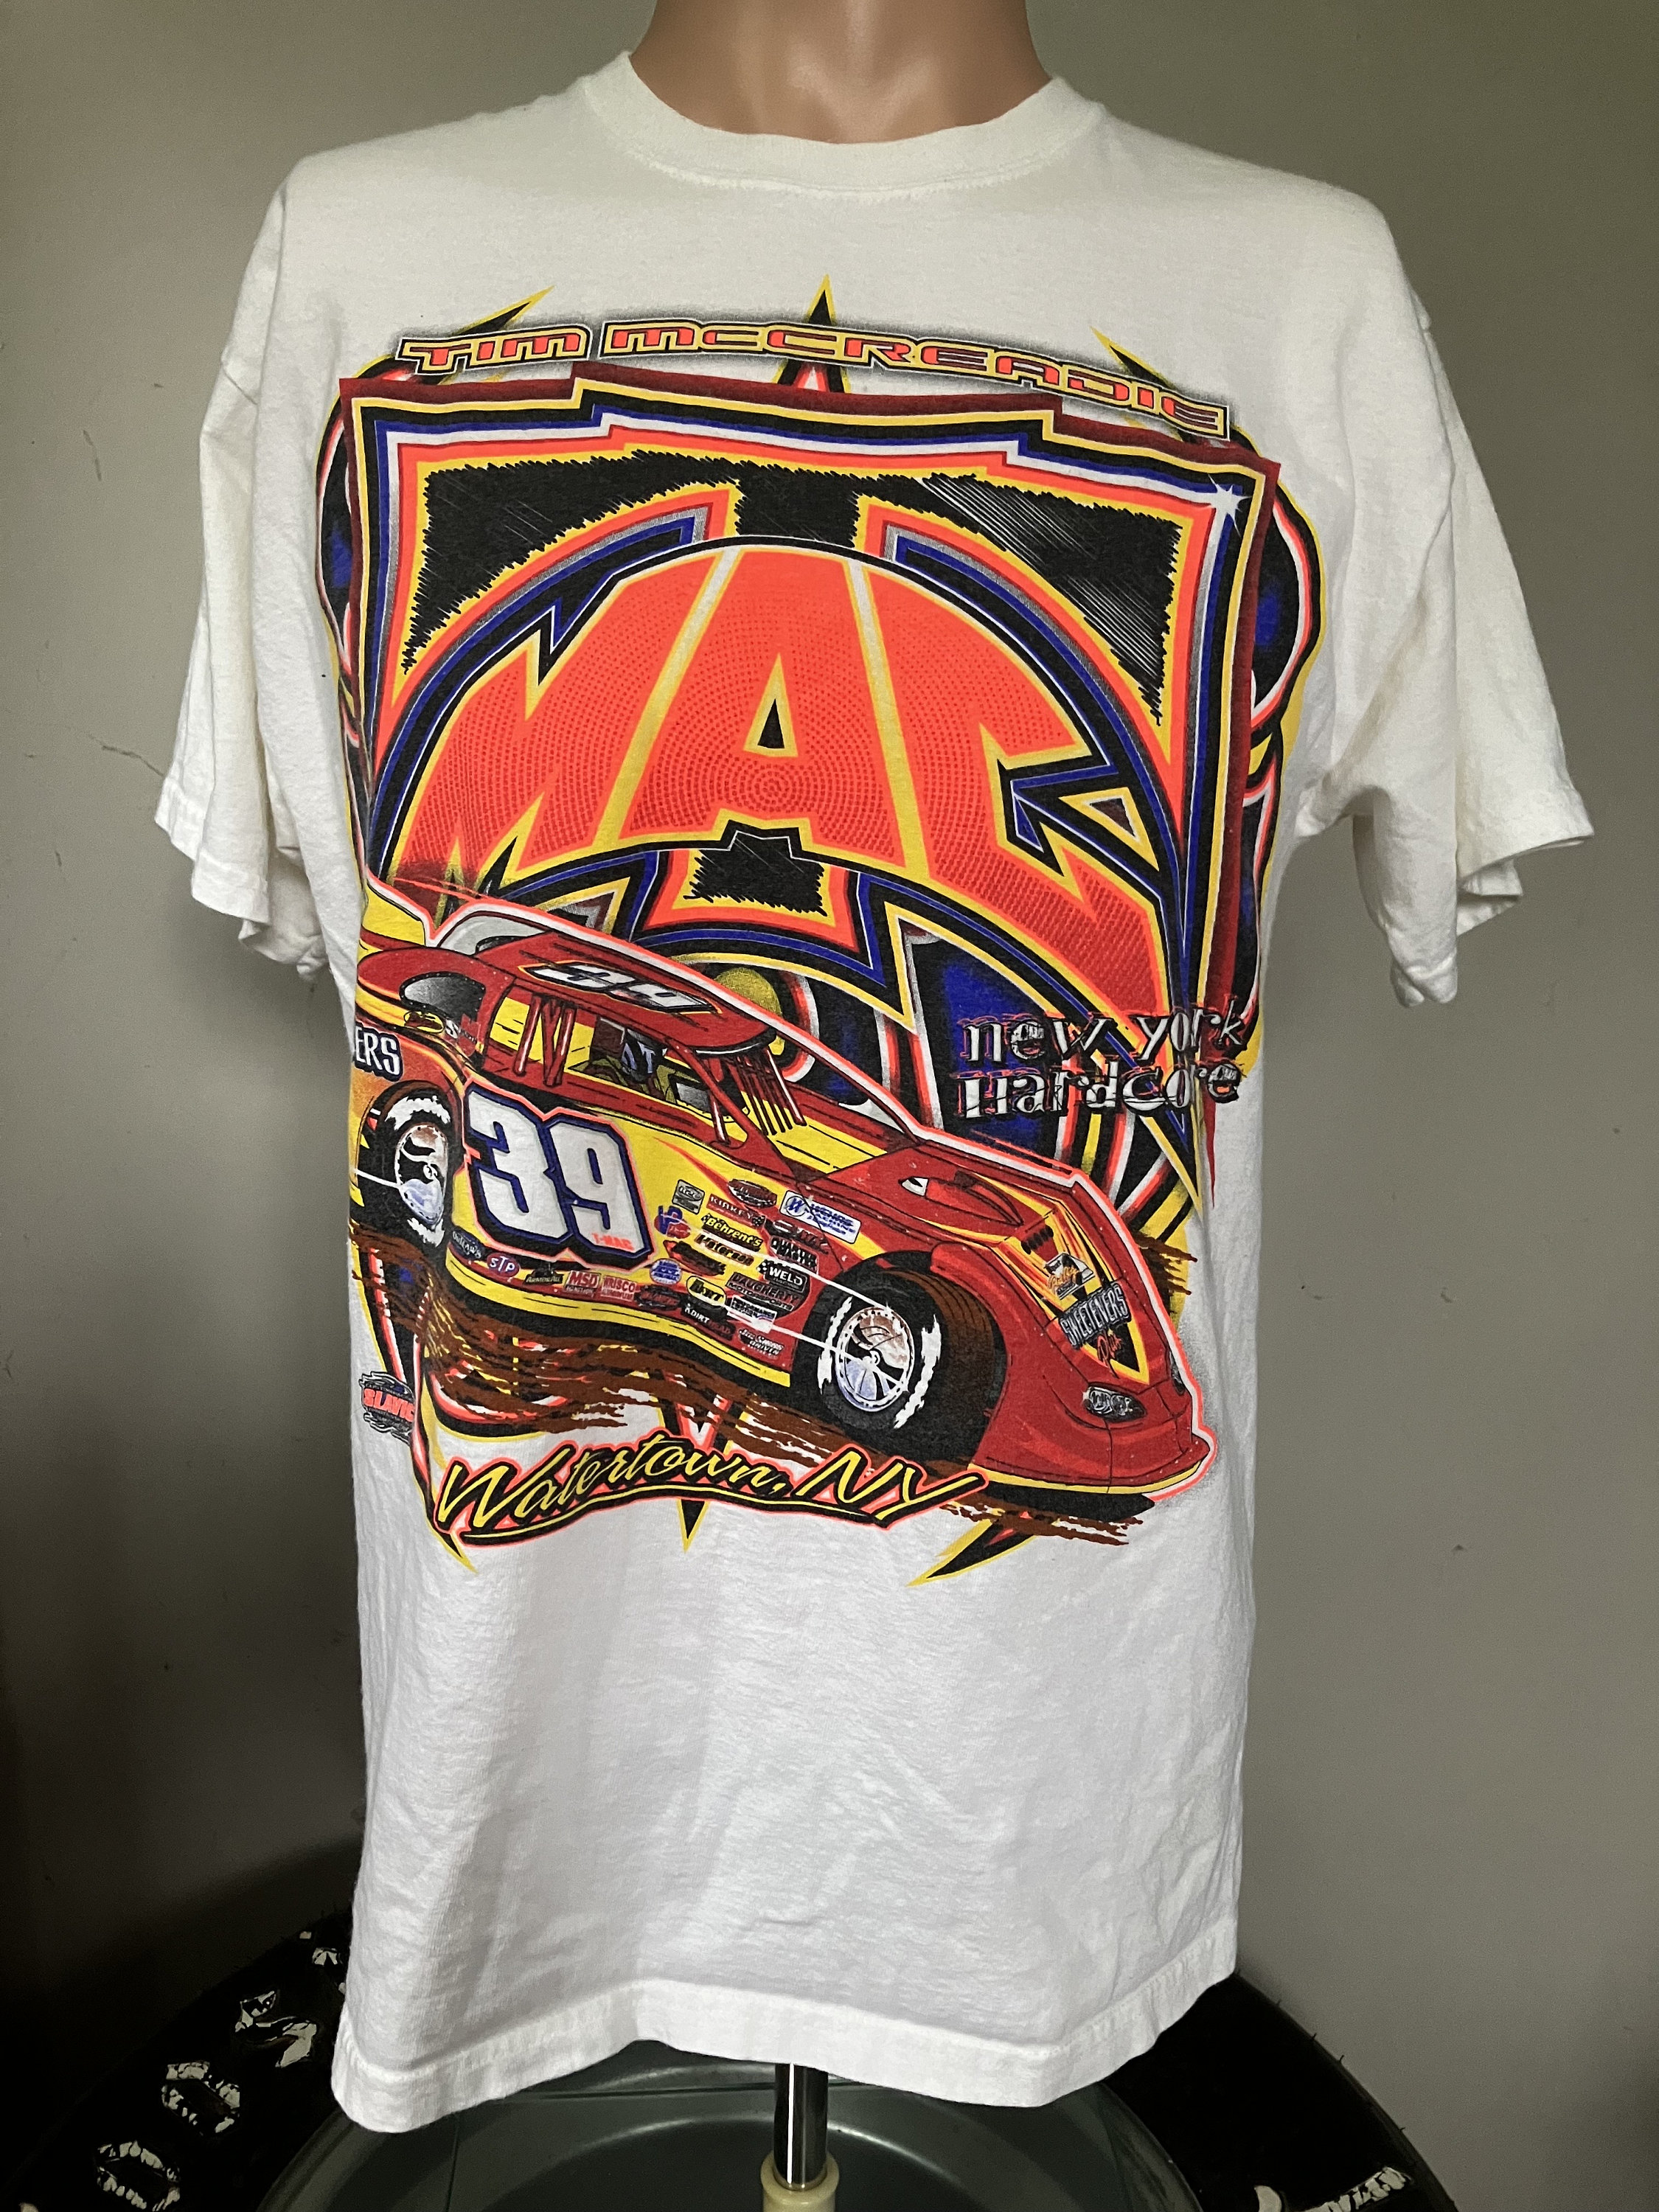 ASI Racewear - Holiday Shirt Drop! New Tim McCreadie